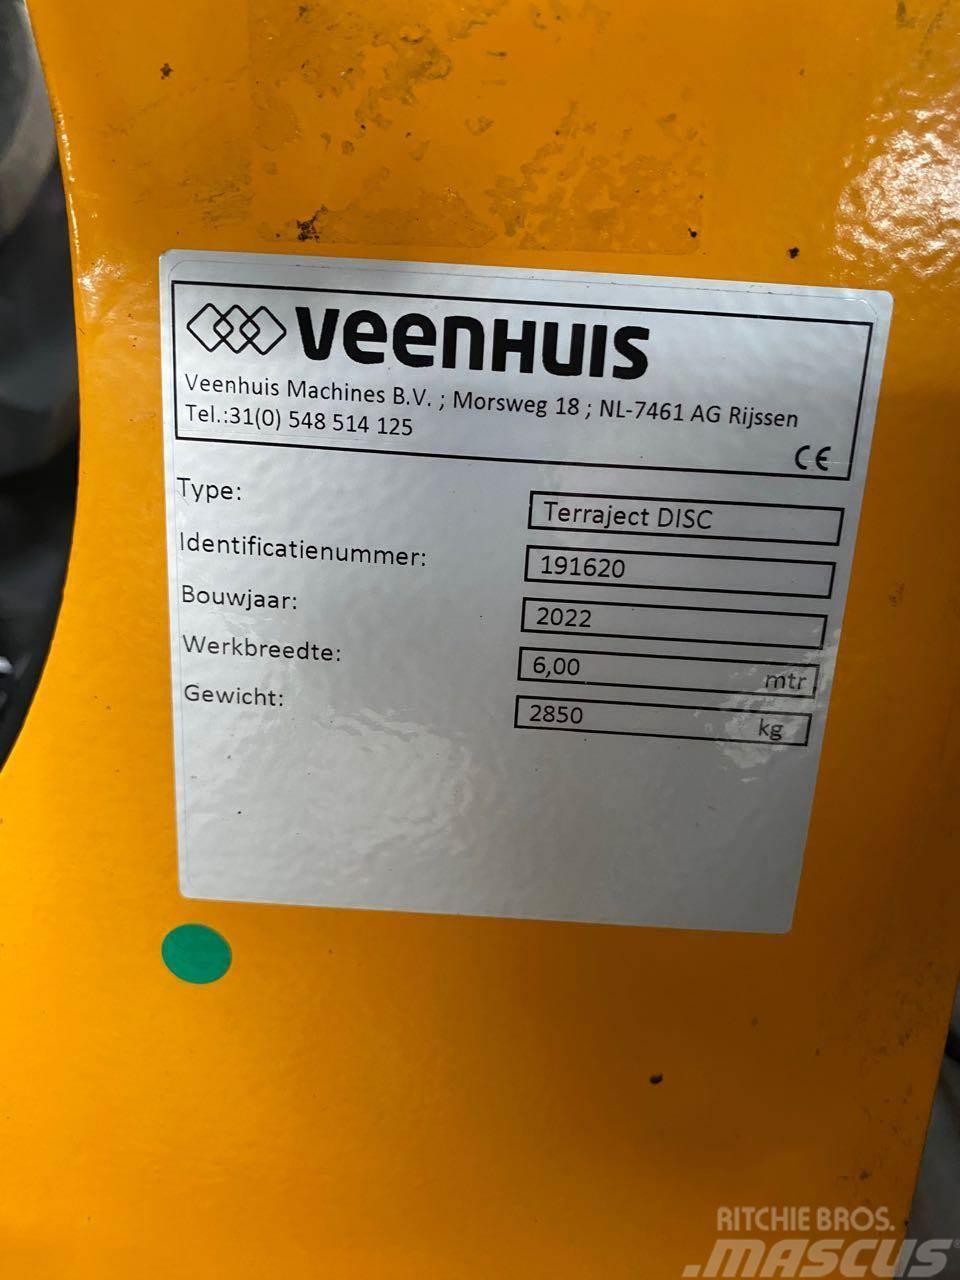 Veenhuis Terraject Disc 6.00 その他肥料用機材とアクセサリー・アタッチメント